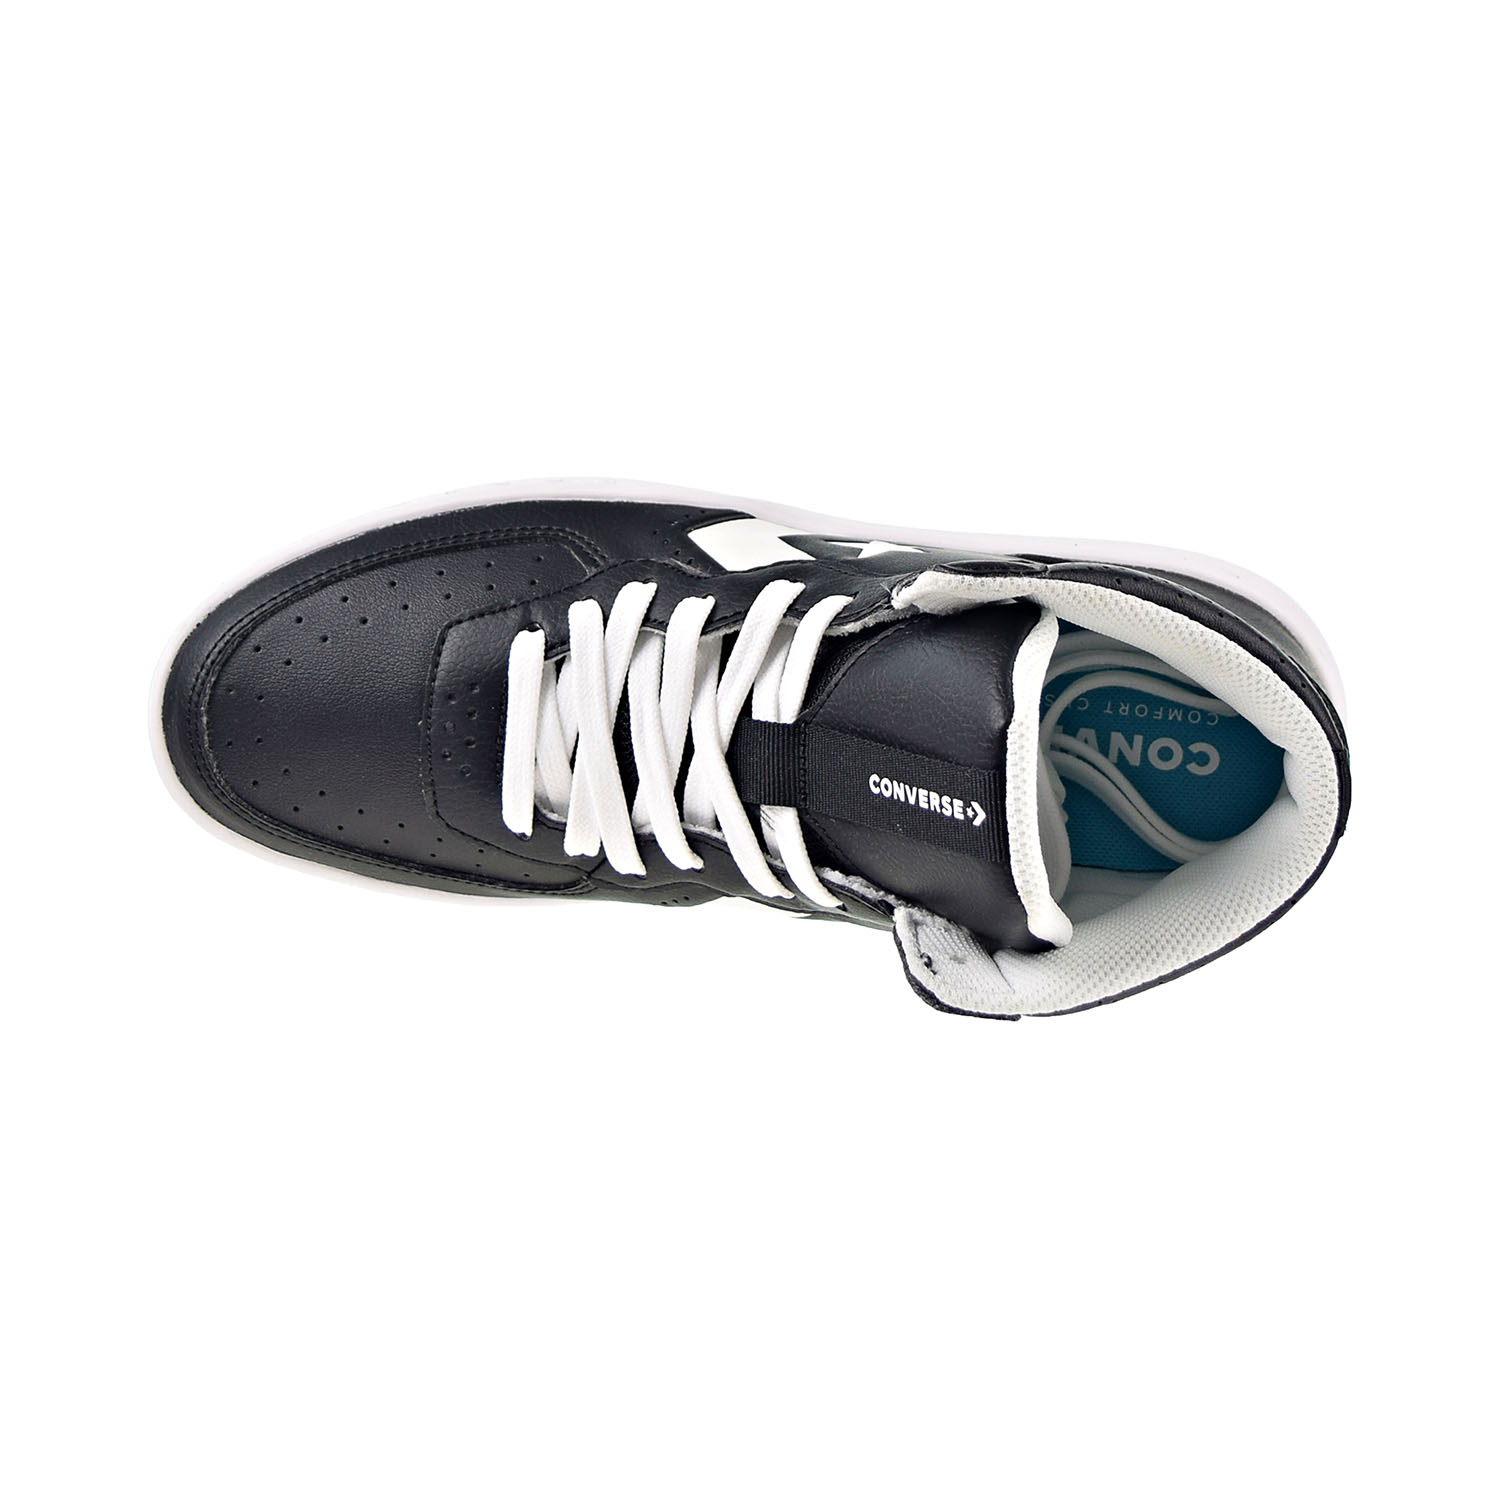 Converse Rival Mid Men's Shoes Black-White 164891c - image 5 of 6